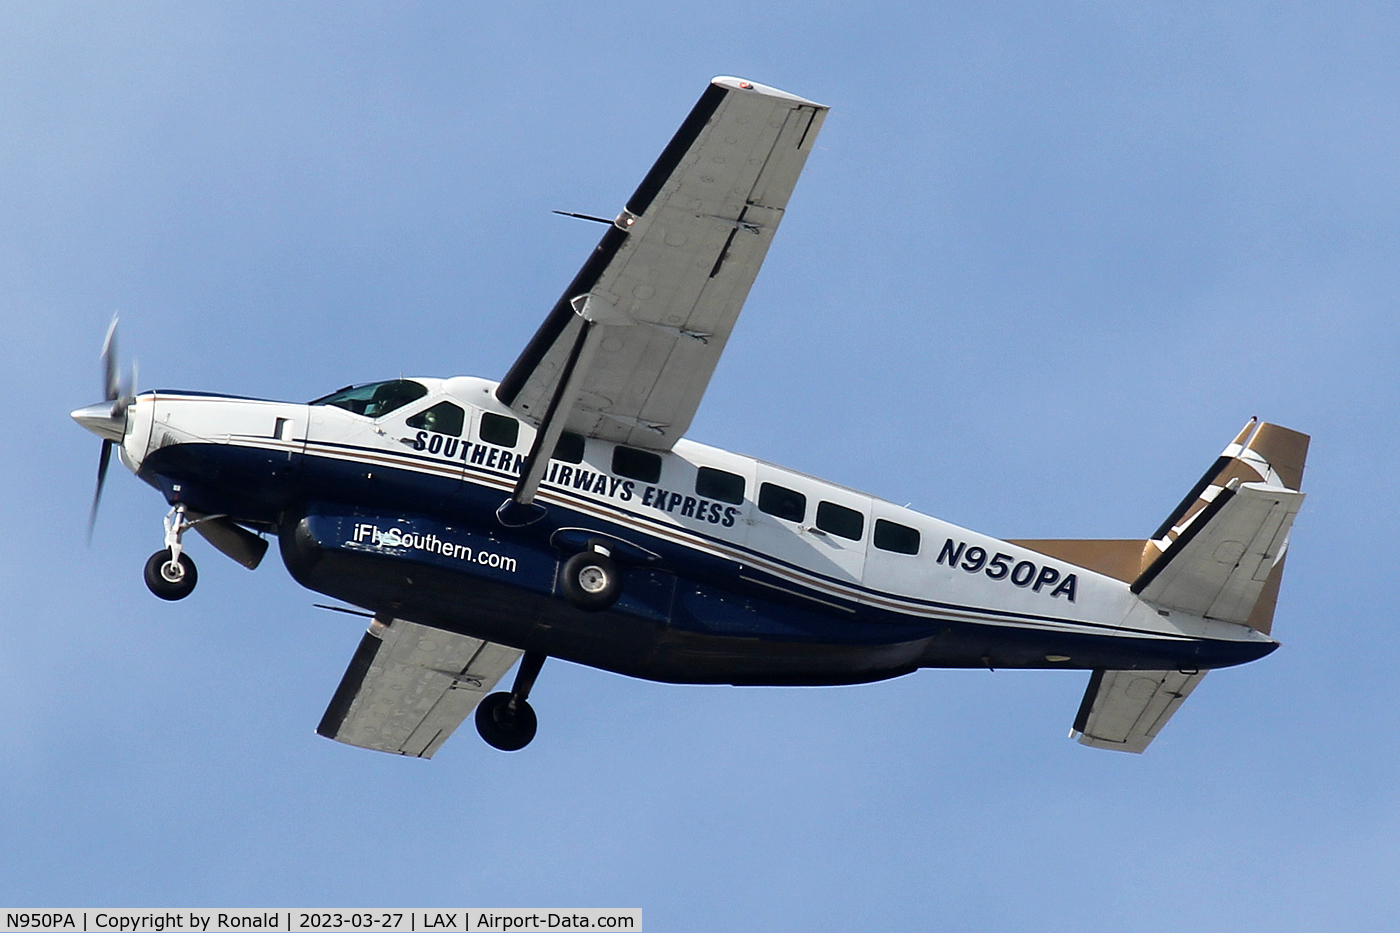 N950PA, 2004 Cessna 208B Grand Caravan C/N 208B-1063, at lax